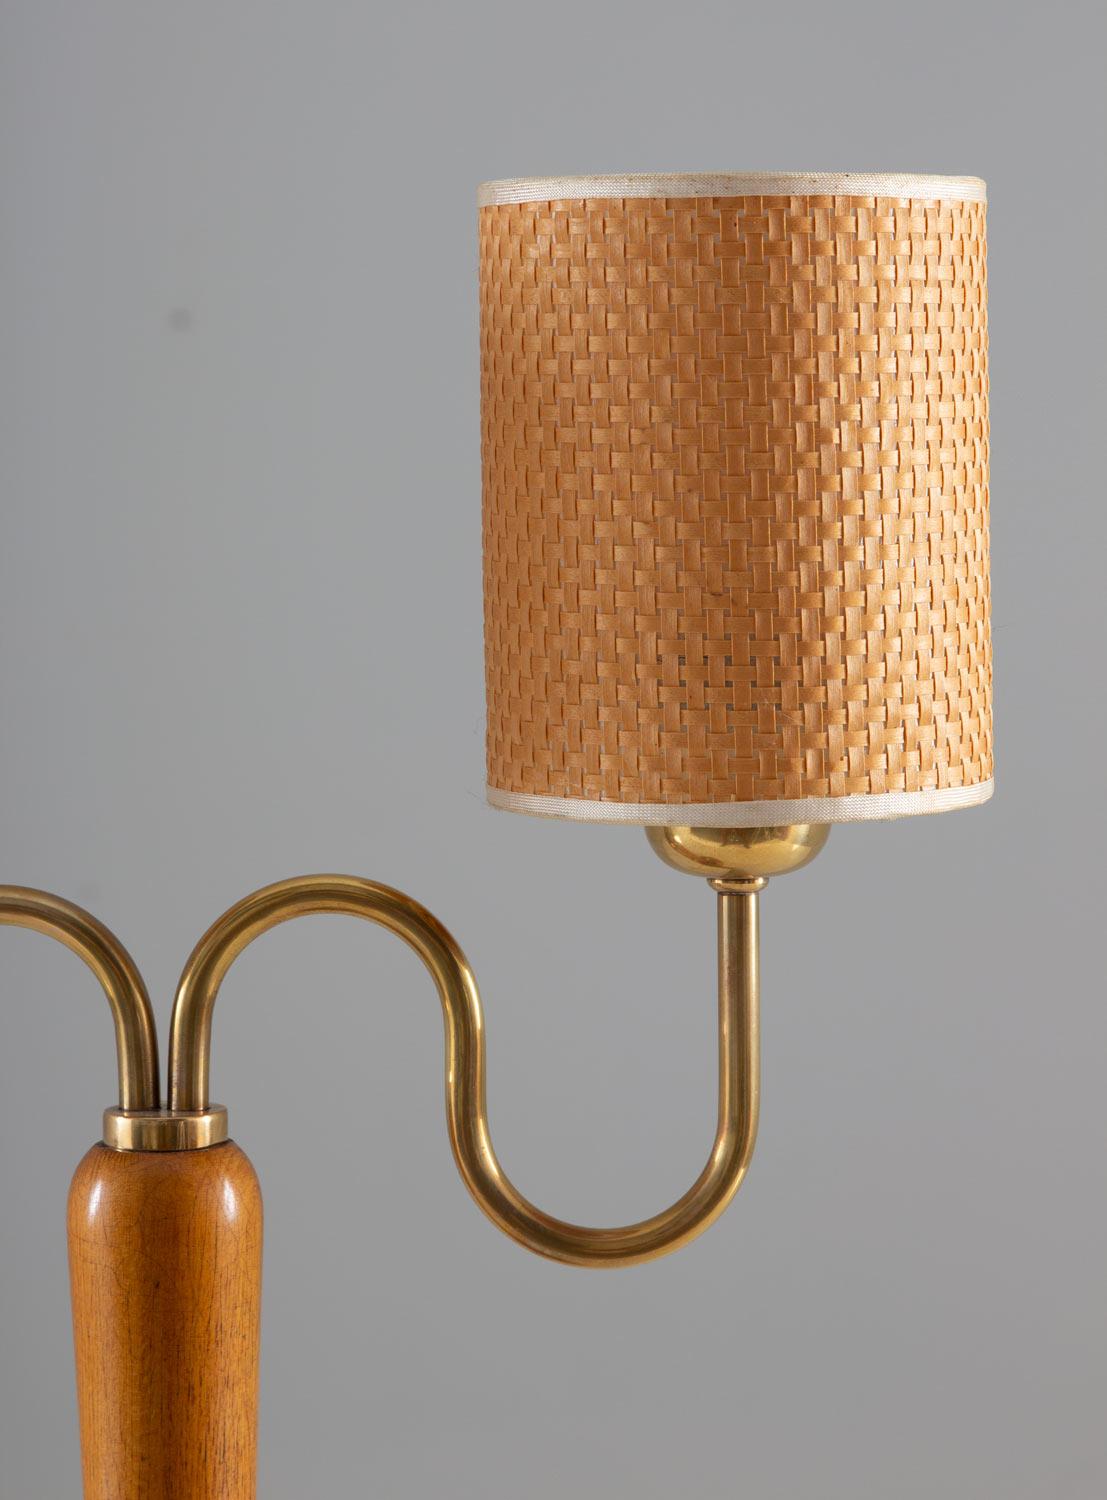 Scandinavian Modern Swedish Midcentury Table Lamp by IWO, 1940s